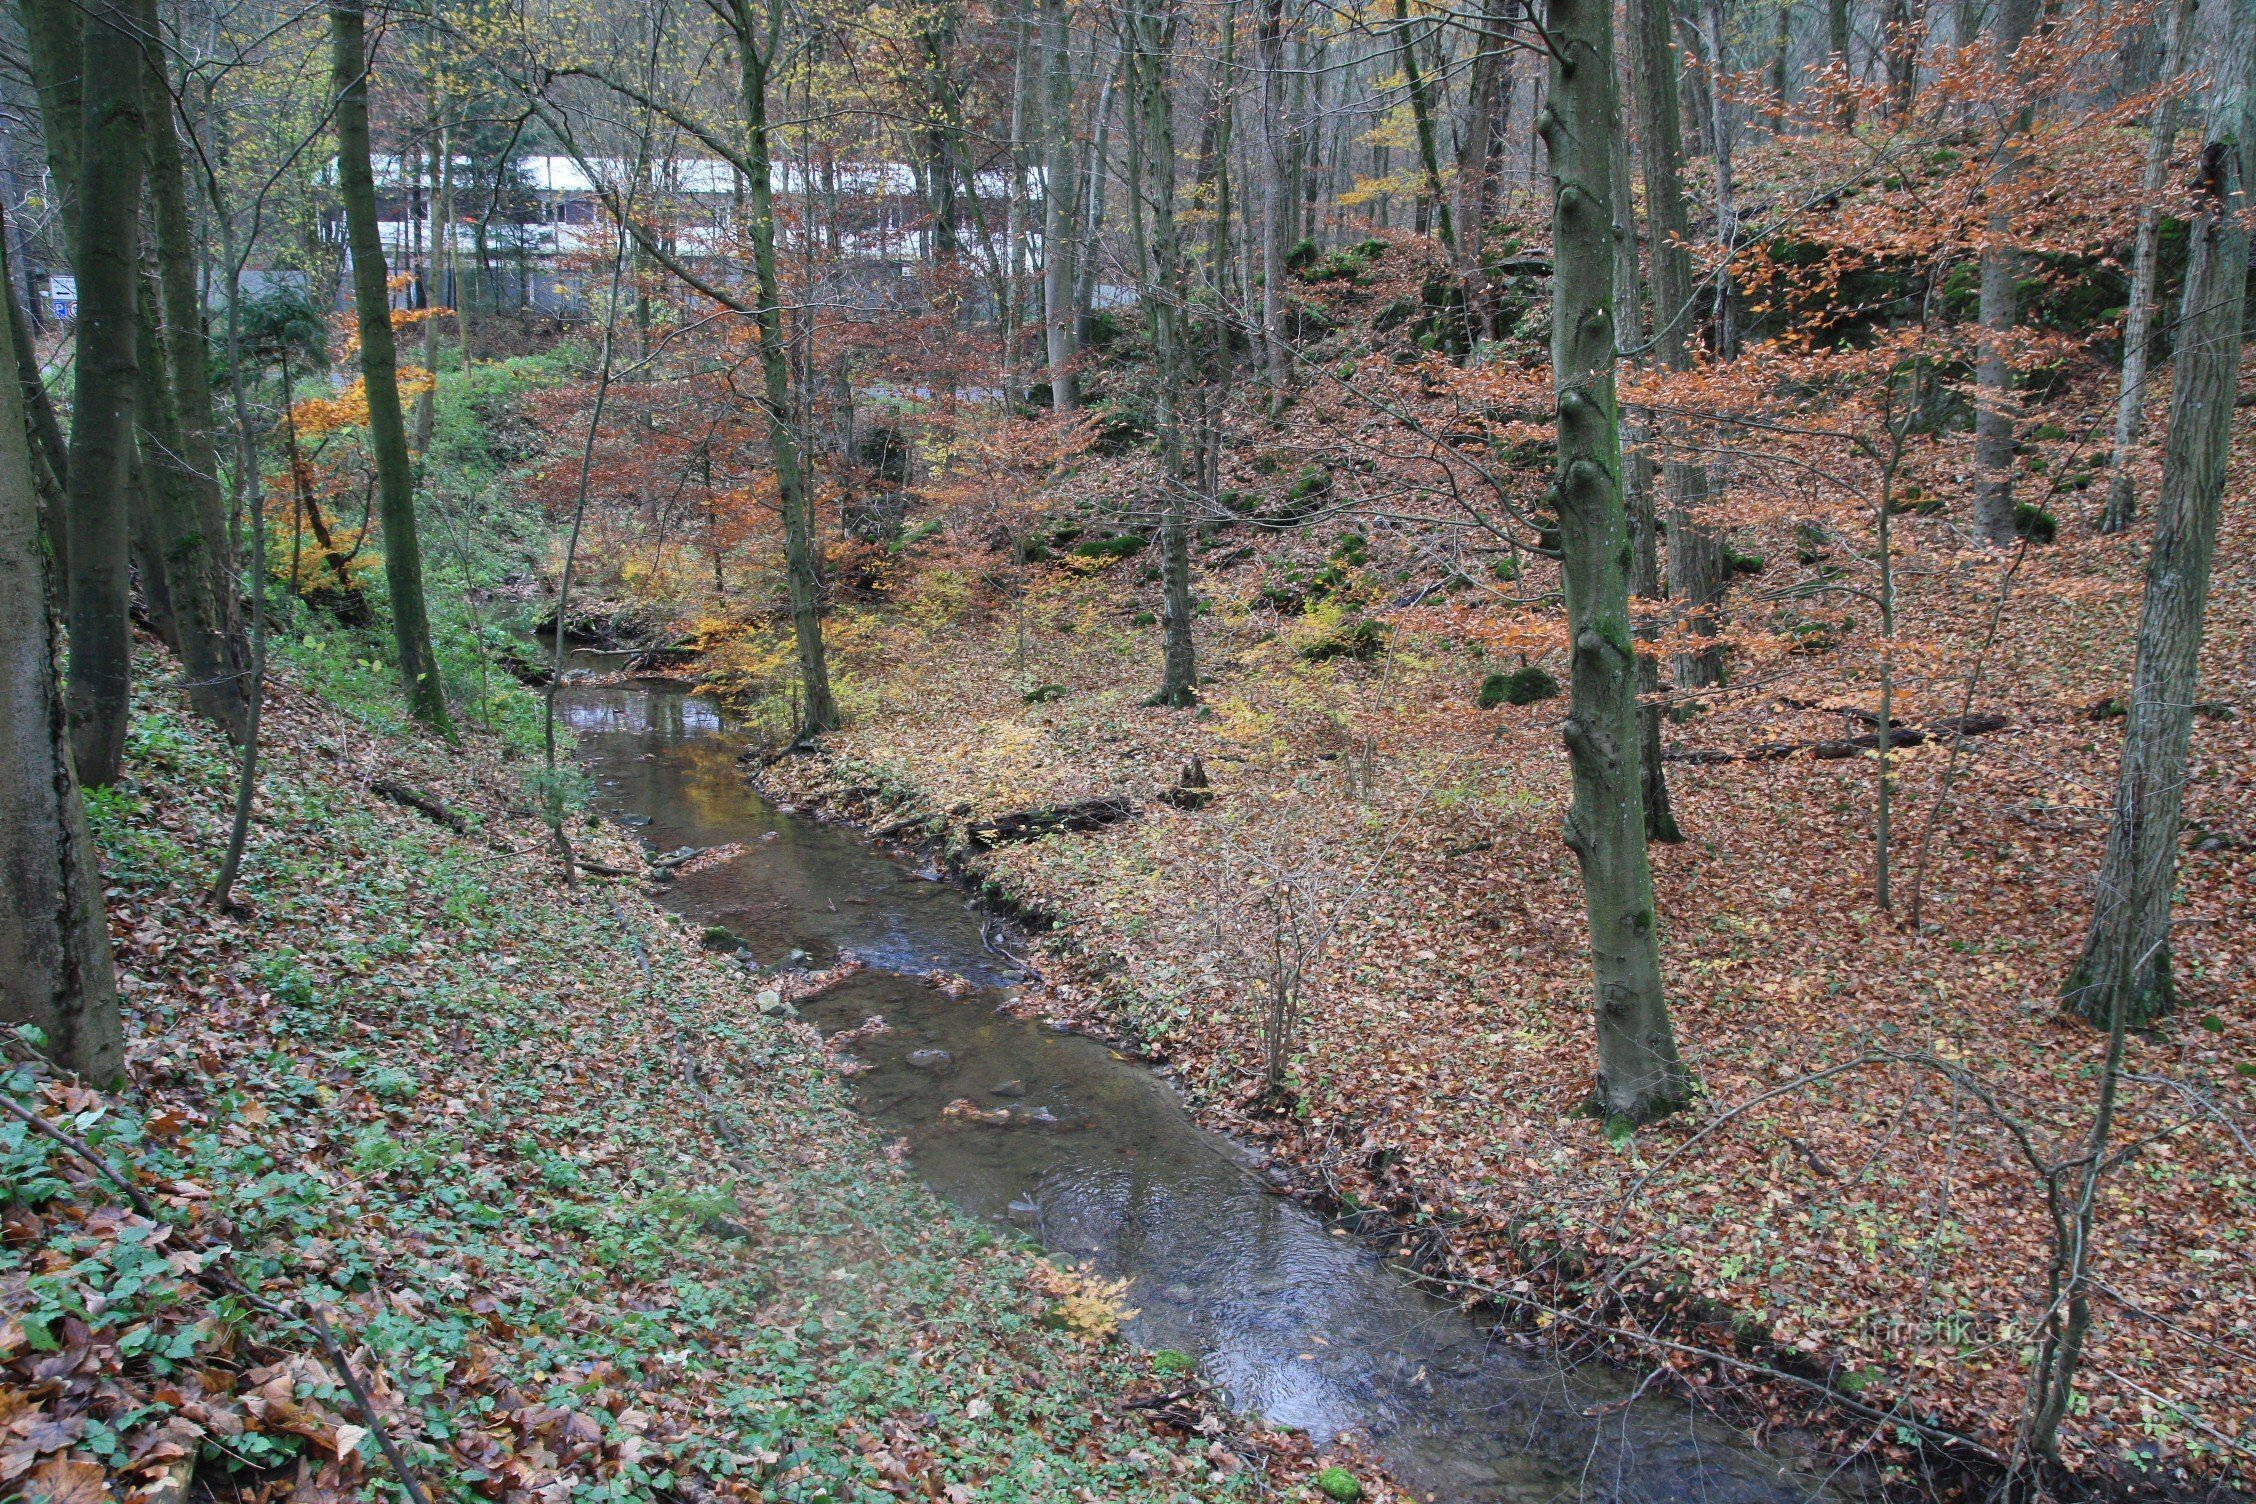 Potok Křtinský, w tle budynek operacyjny jaskini Výpustek